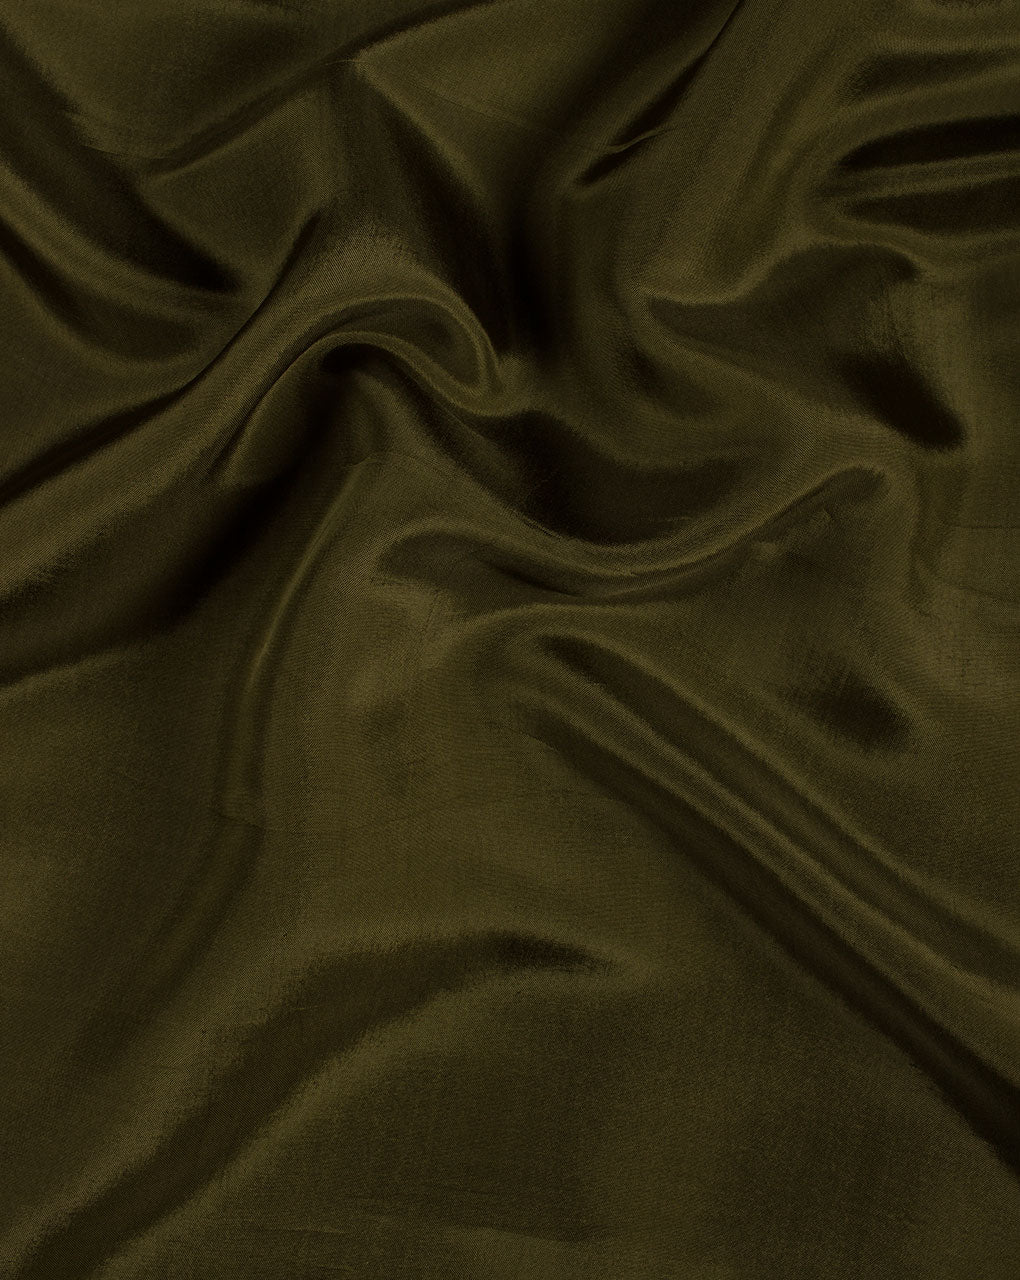 Olive Green Plain Uppada Silk Fabric - Fabriclore.com